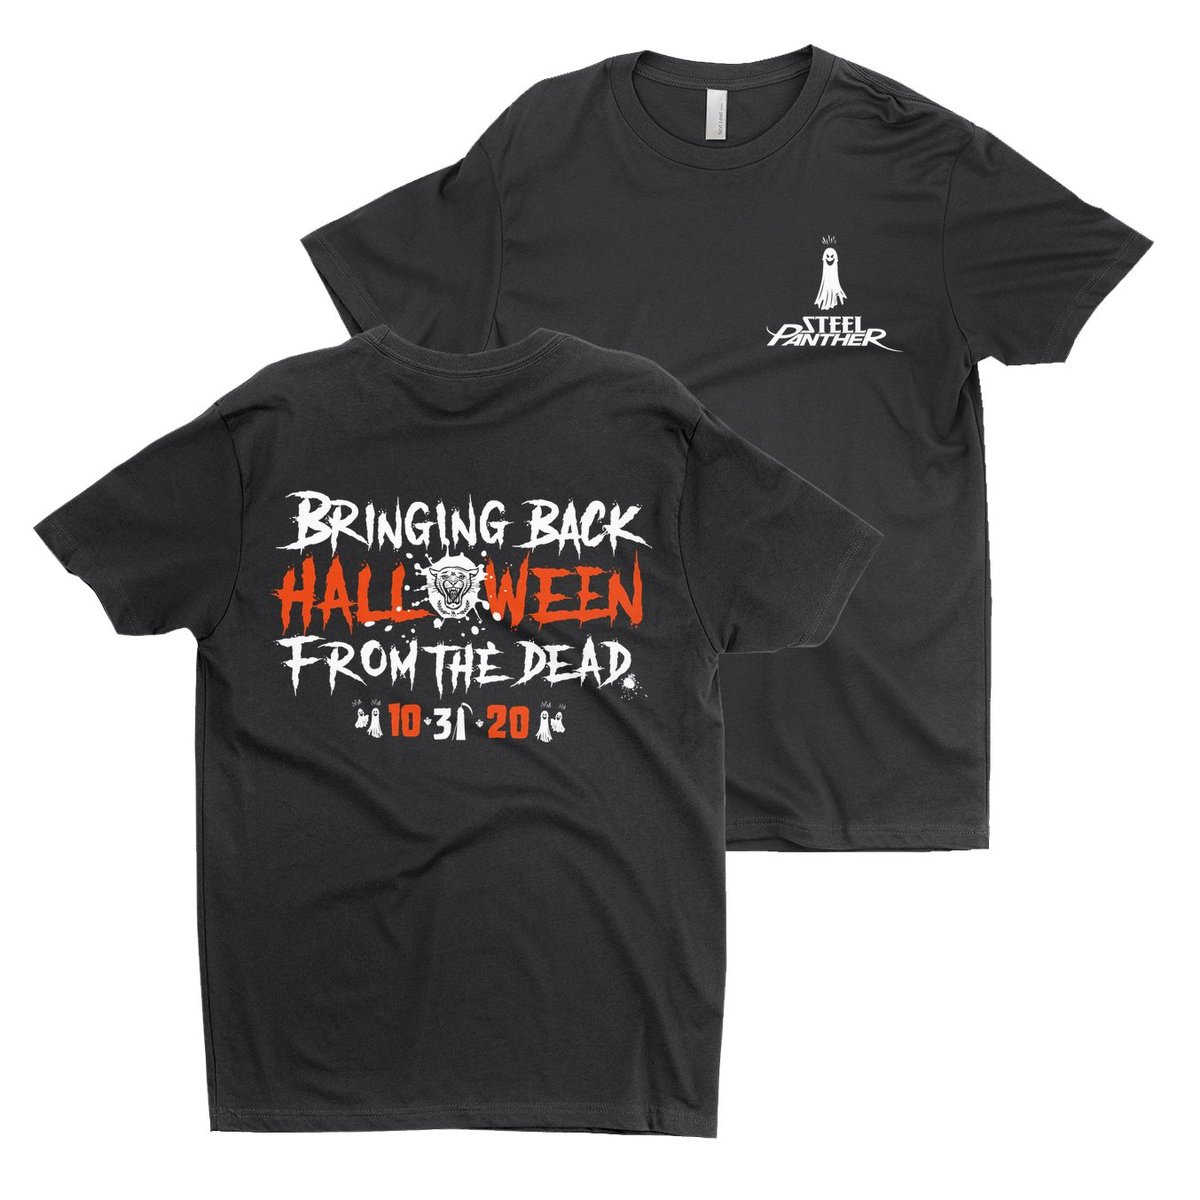 Halloweenie Ride Livescream Shirts